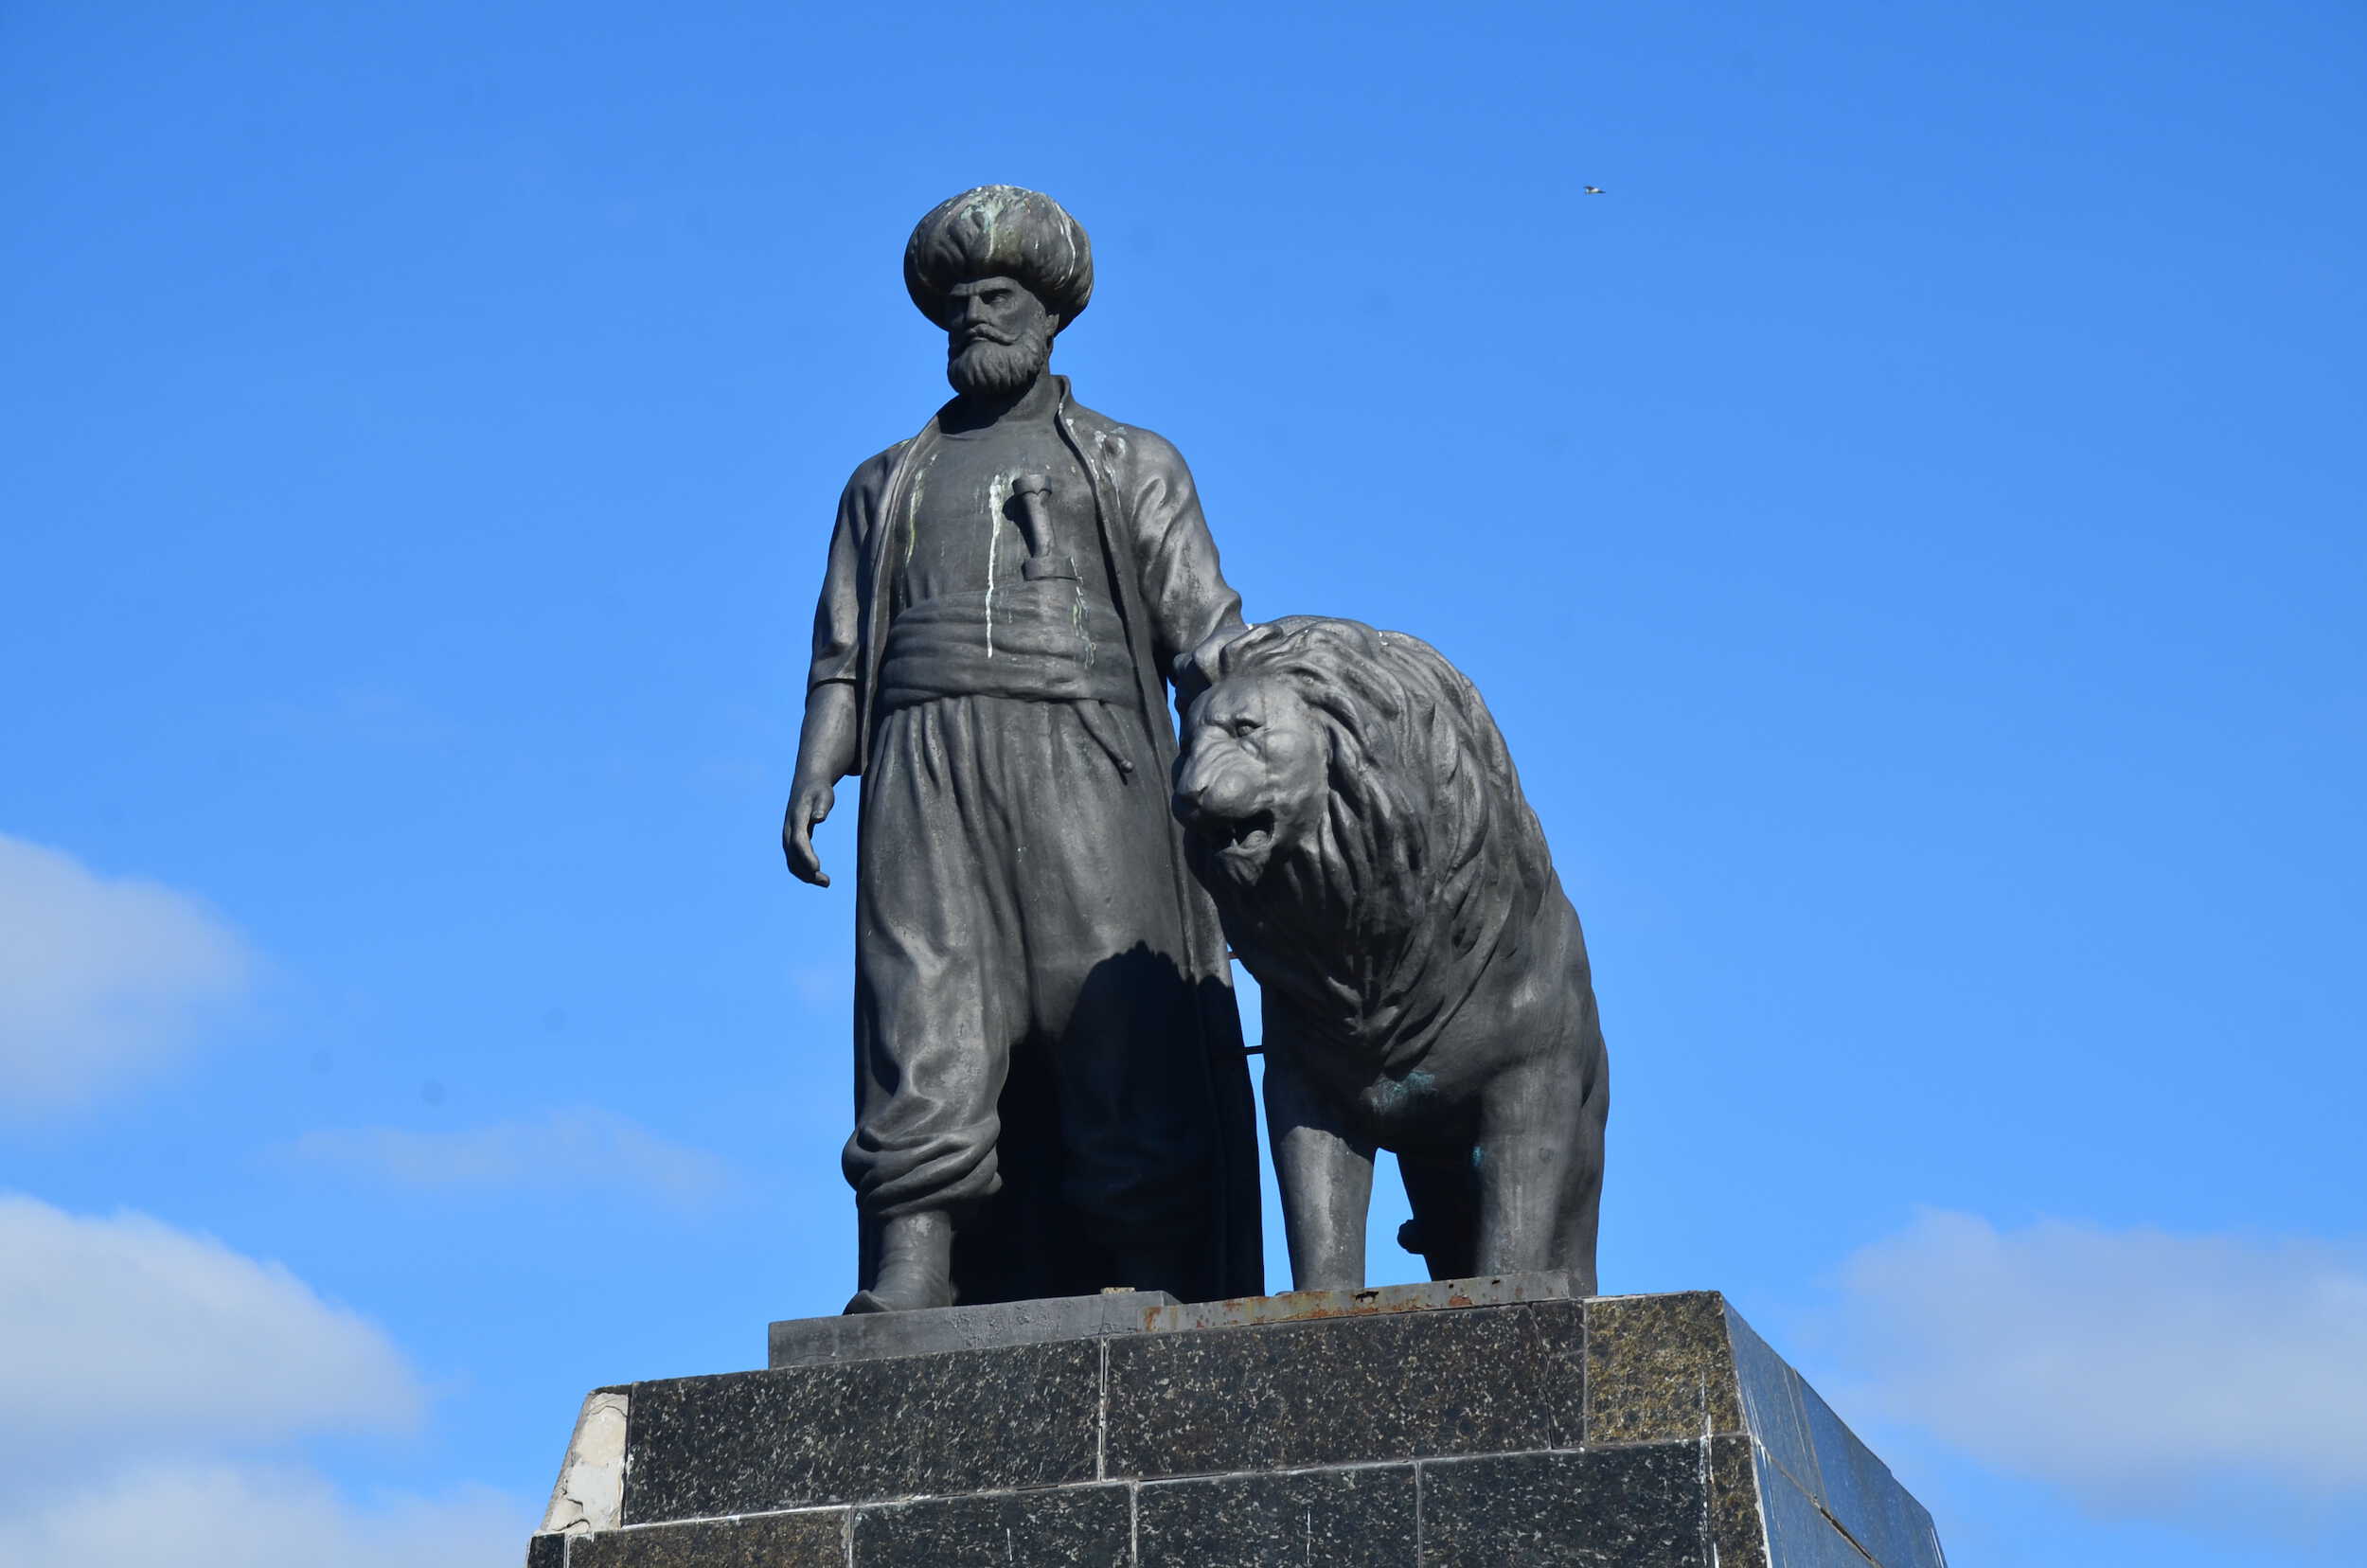 Statue of Cezayirli Hasan Pasha in Kasımpaşa, Istanbul, Turkey